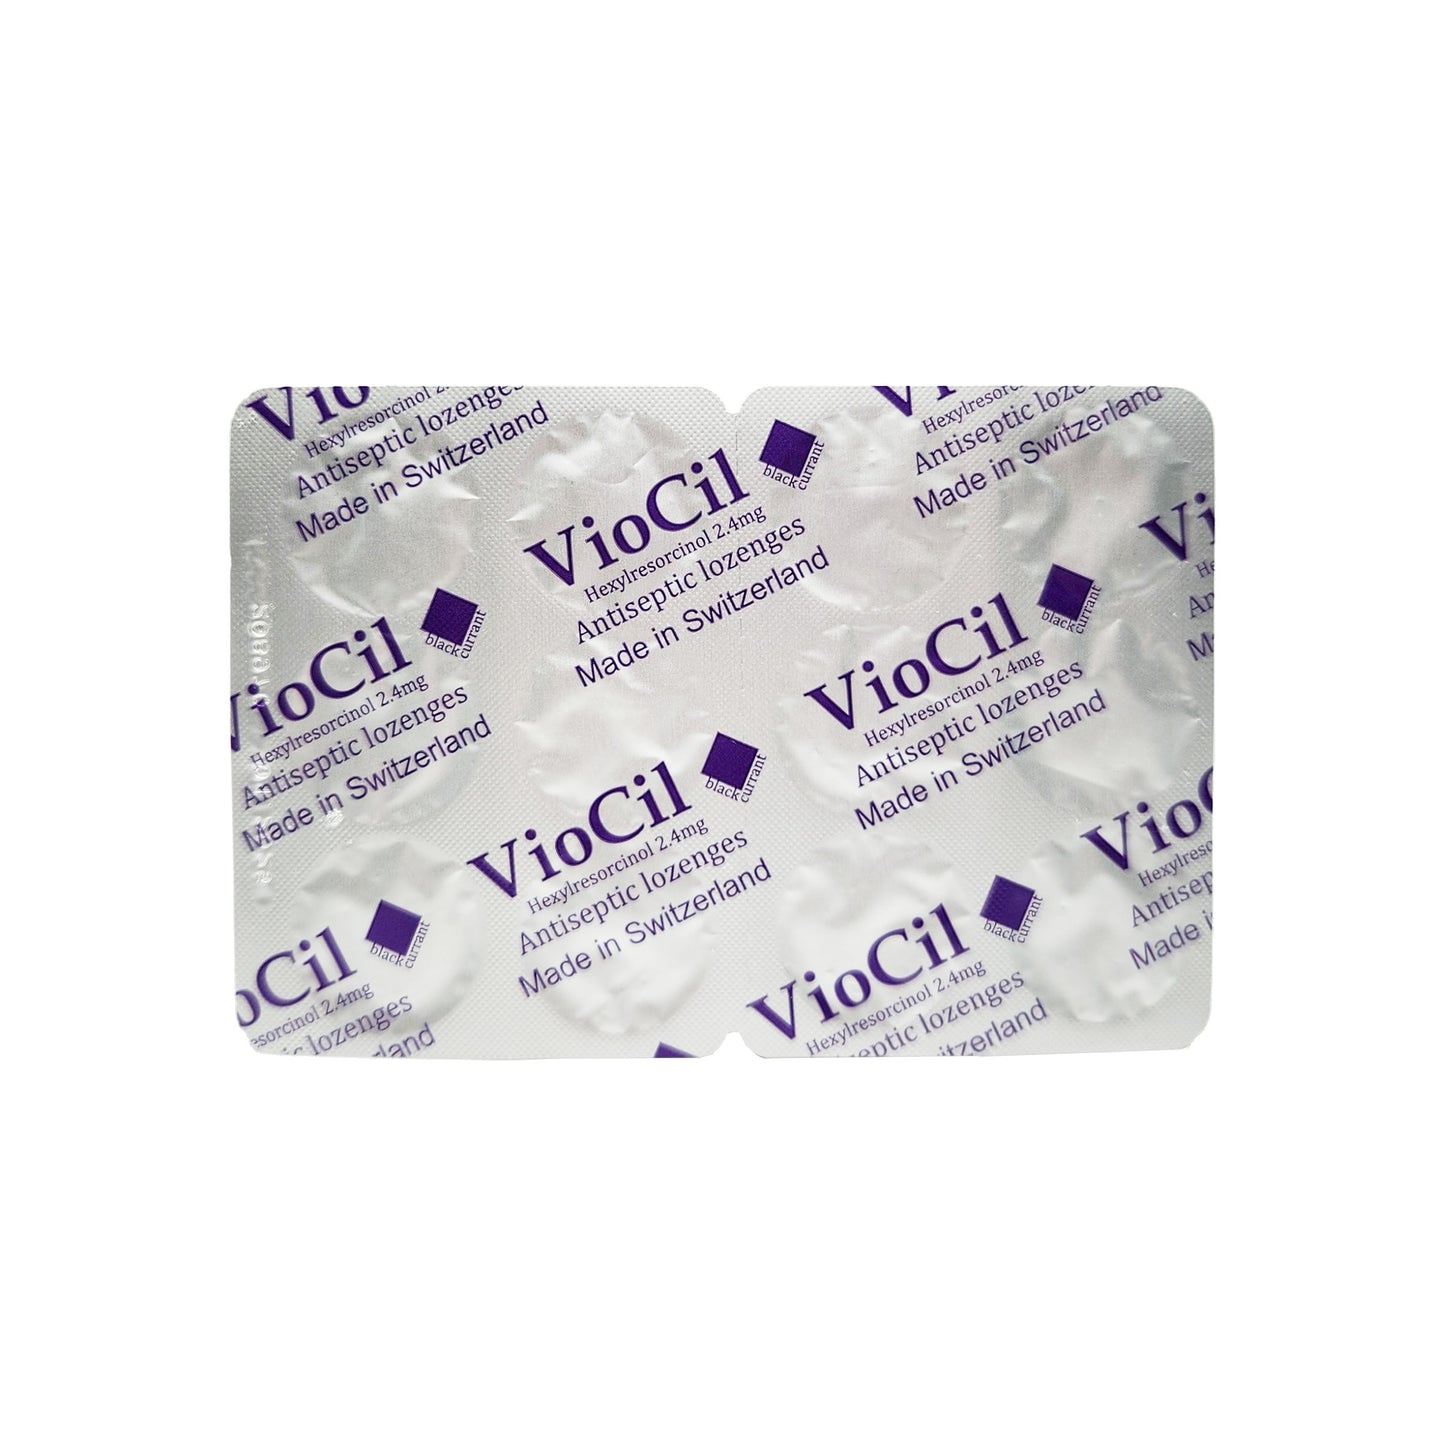 Viocil 黑醋栗含片 12 片 X 2 